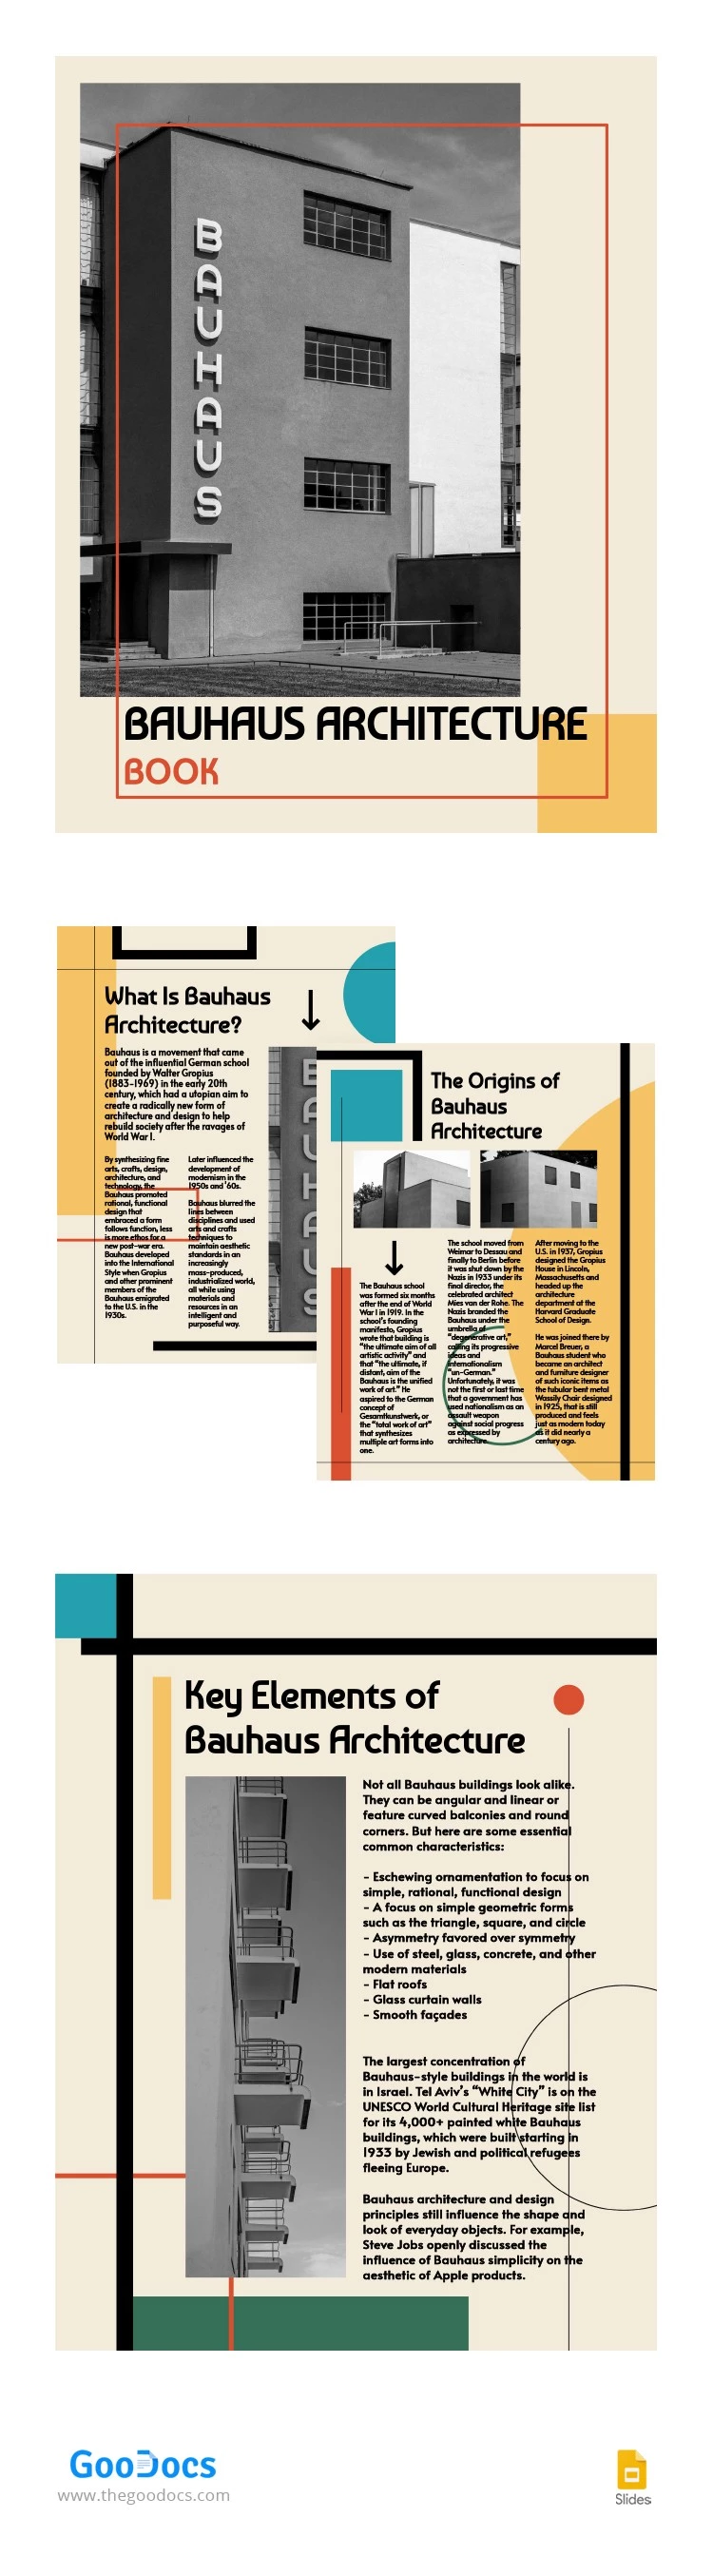 Bauhaus-Architekturbuch - free Google Docs Template - 10064507